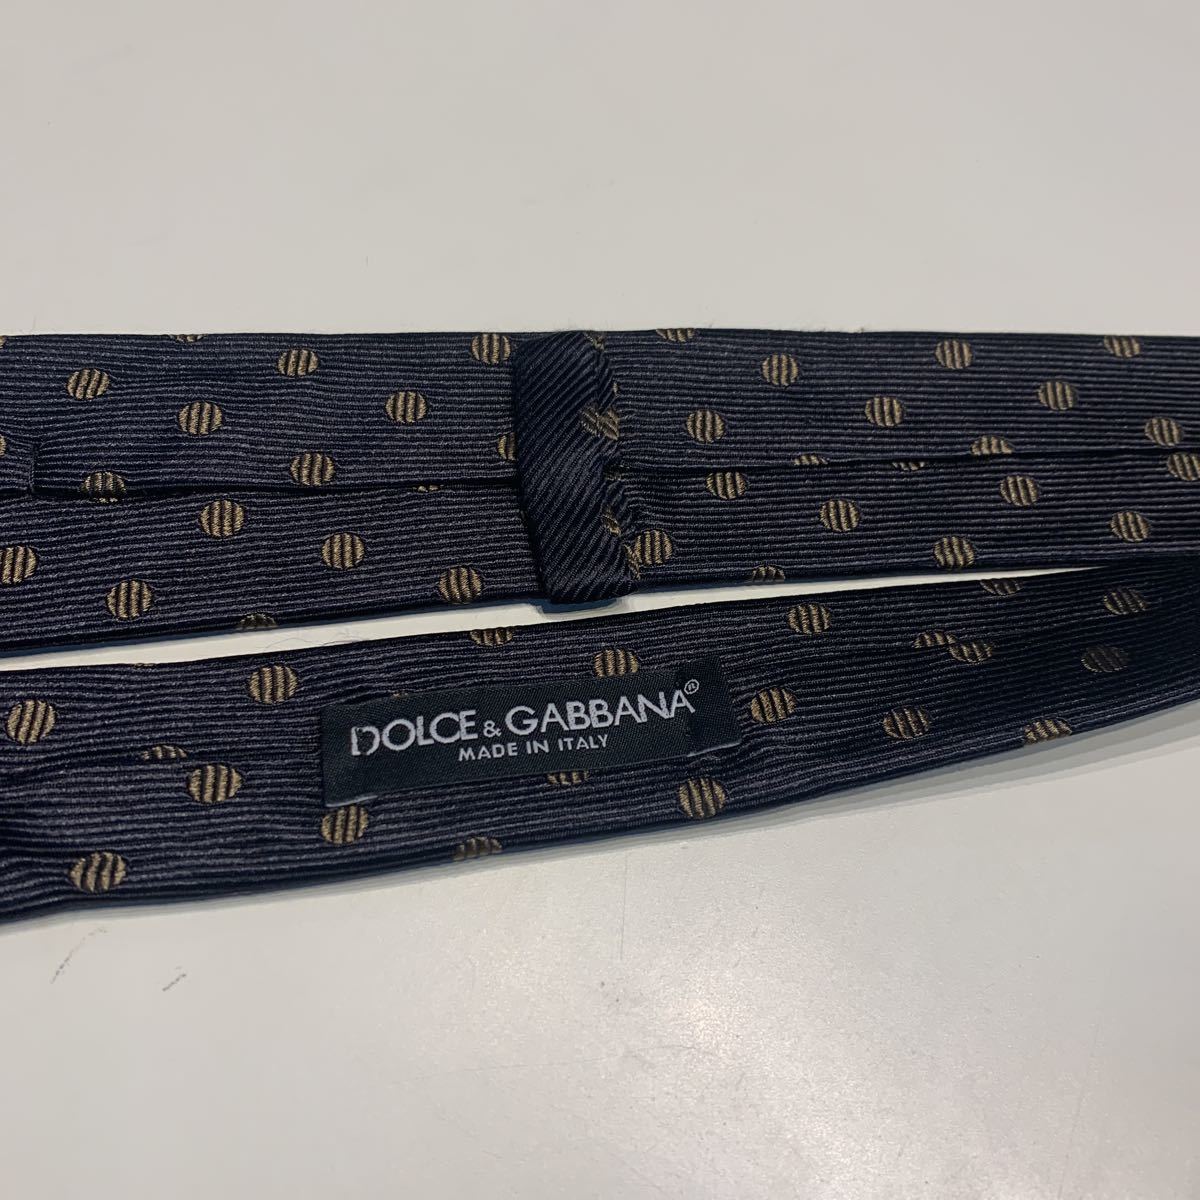  approximately 2 ten thousand jpy regular goods Dolce & Gabbana men's business casual narrow necktie DOLCE&GABBANA polka dot Italy made DG D&G necktie 